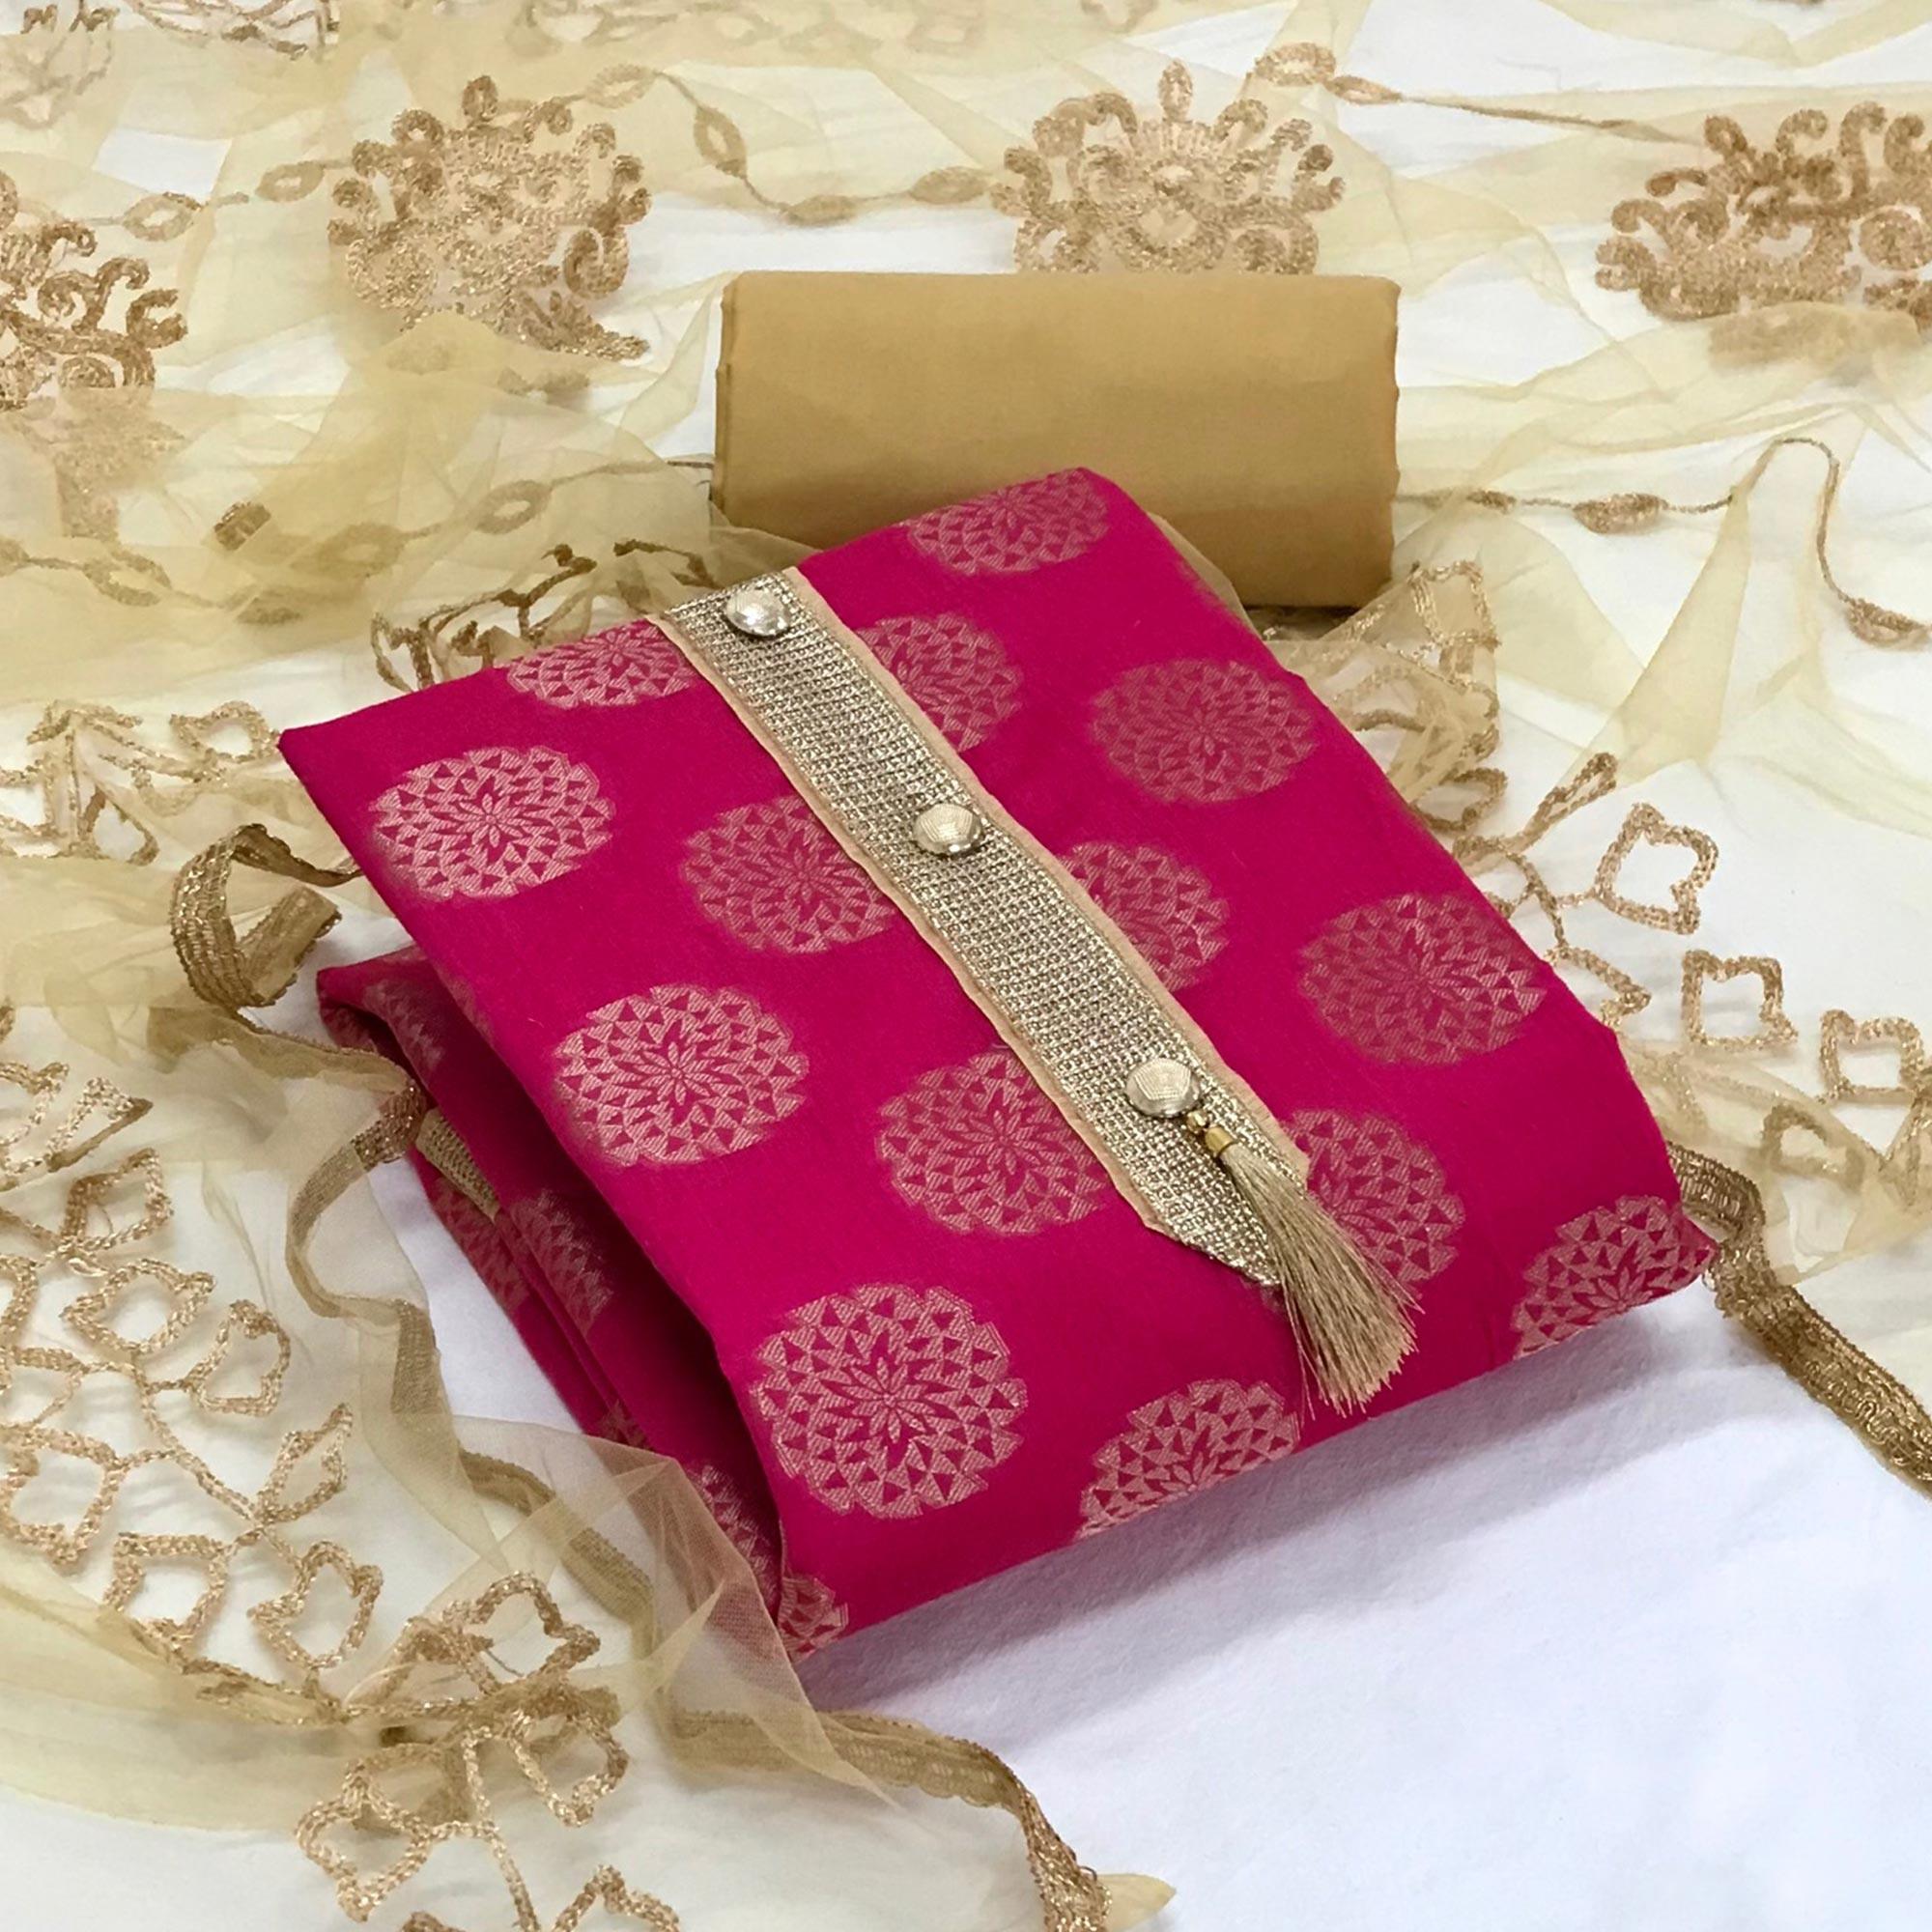 Rani Pink Festive Wear Woven Banarasi Silk Dress Material - Peachmode